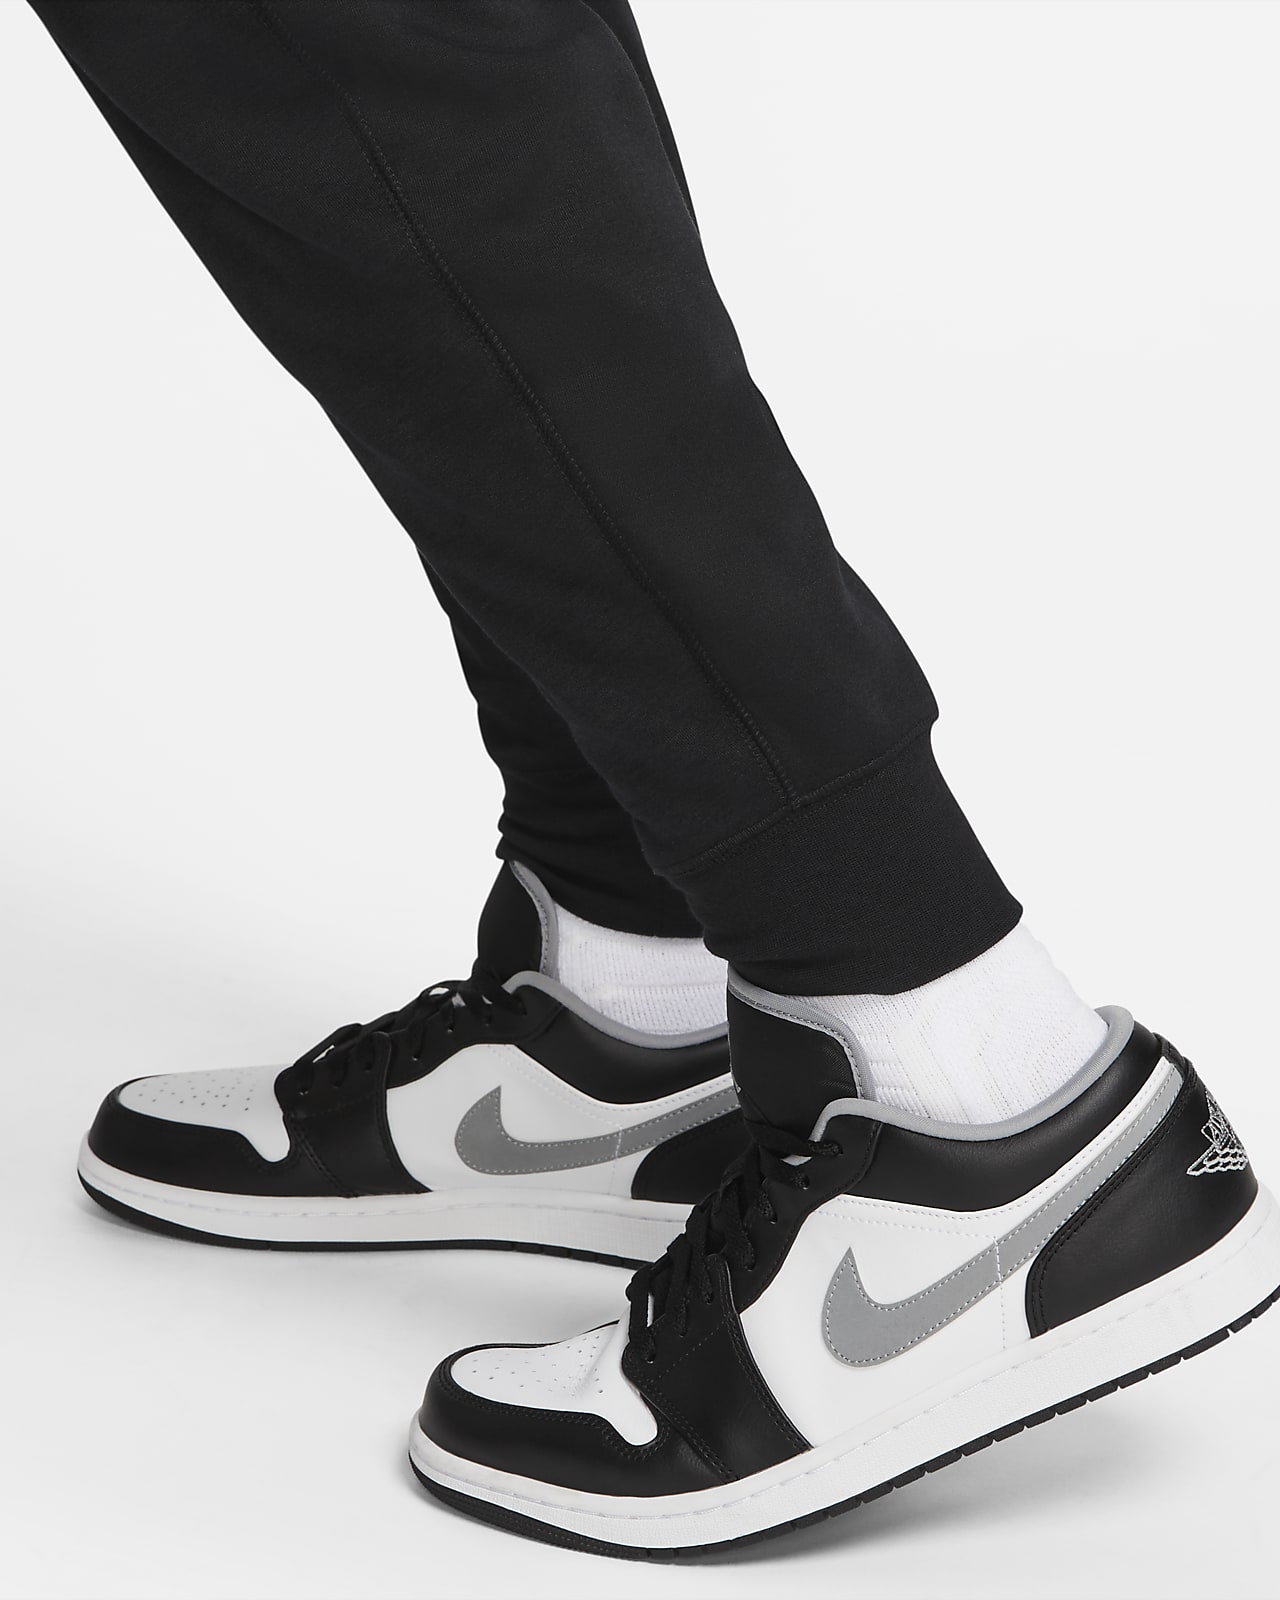 Jordan Dri-FIT Air Men's Fleece Trousers. Nike CA